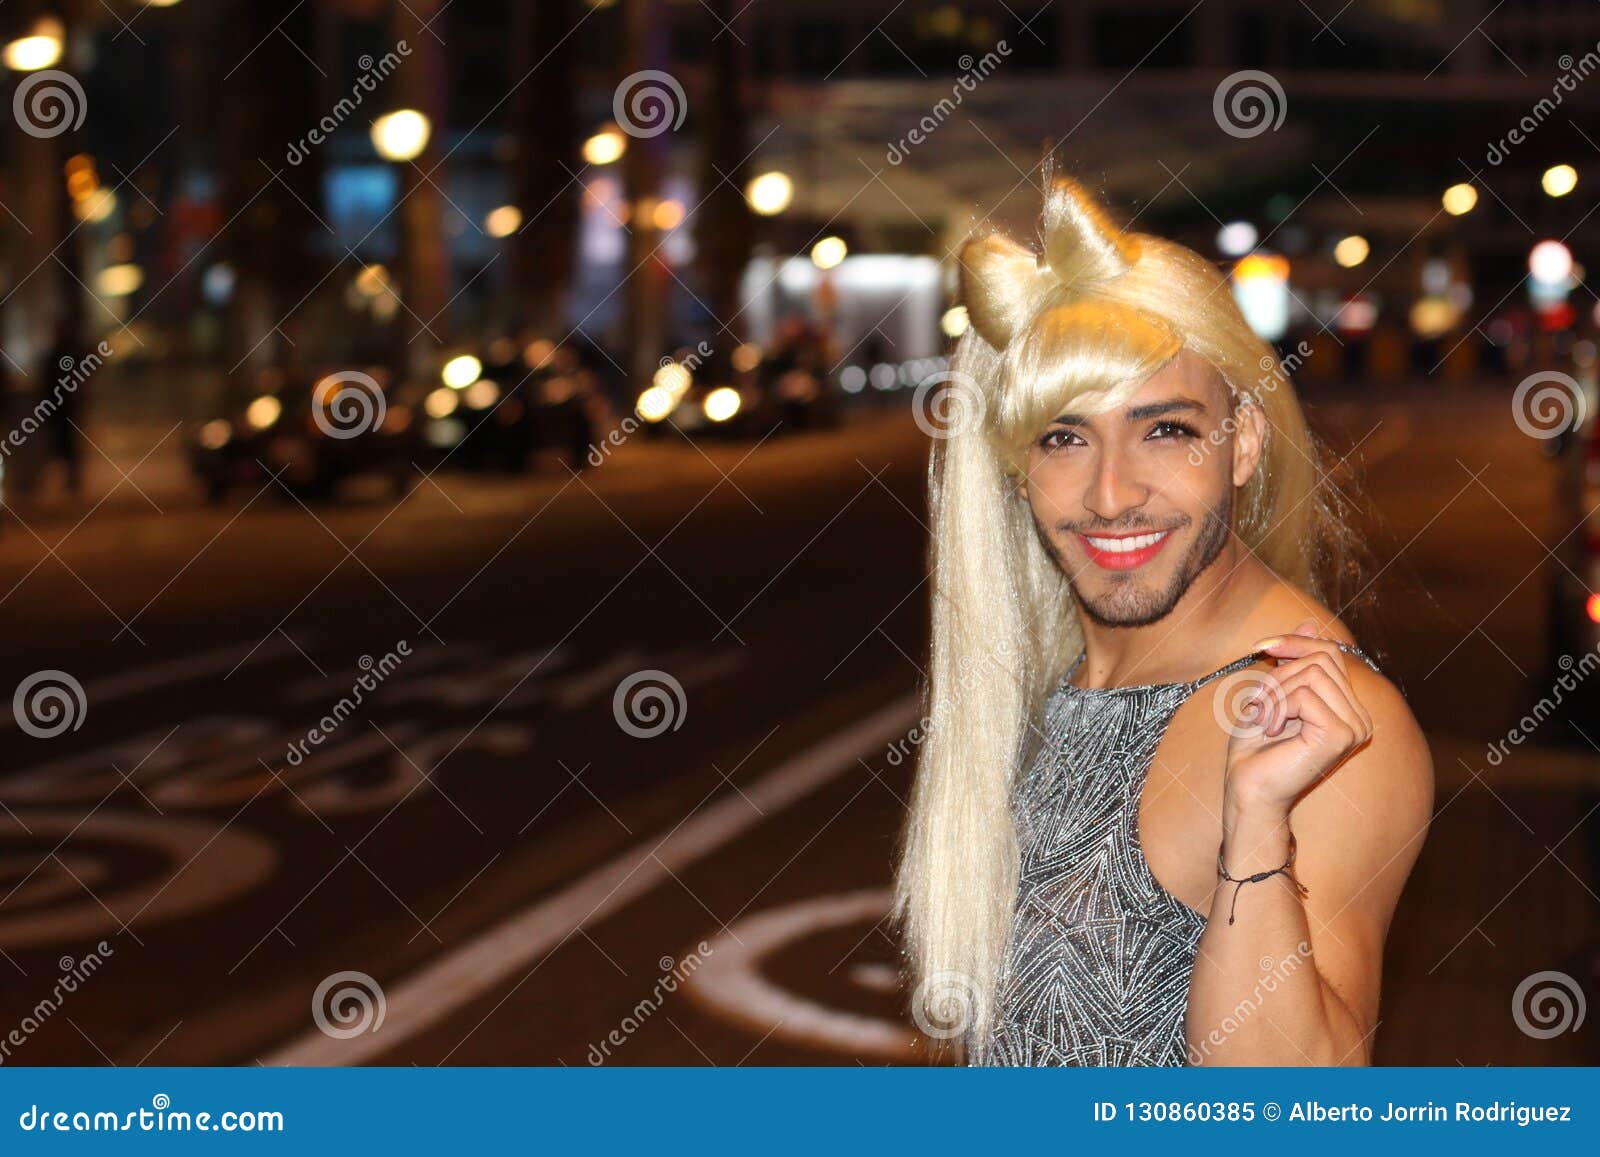 muscular-transvestite-beard-blonde-wig-muscular-transvestite-beard-blonde-wig-130860385.jpg